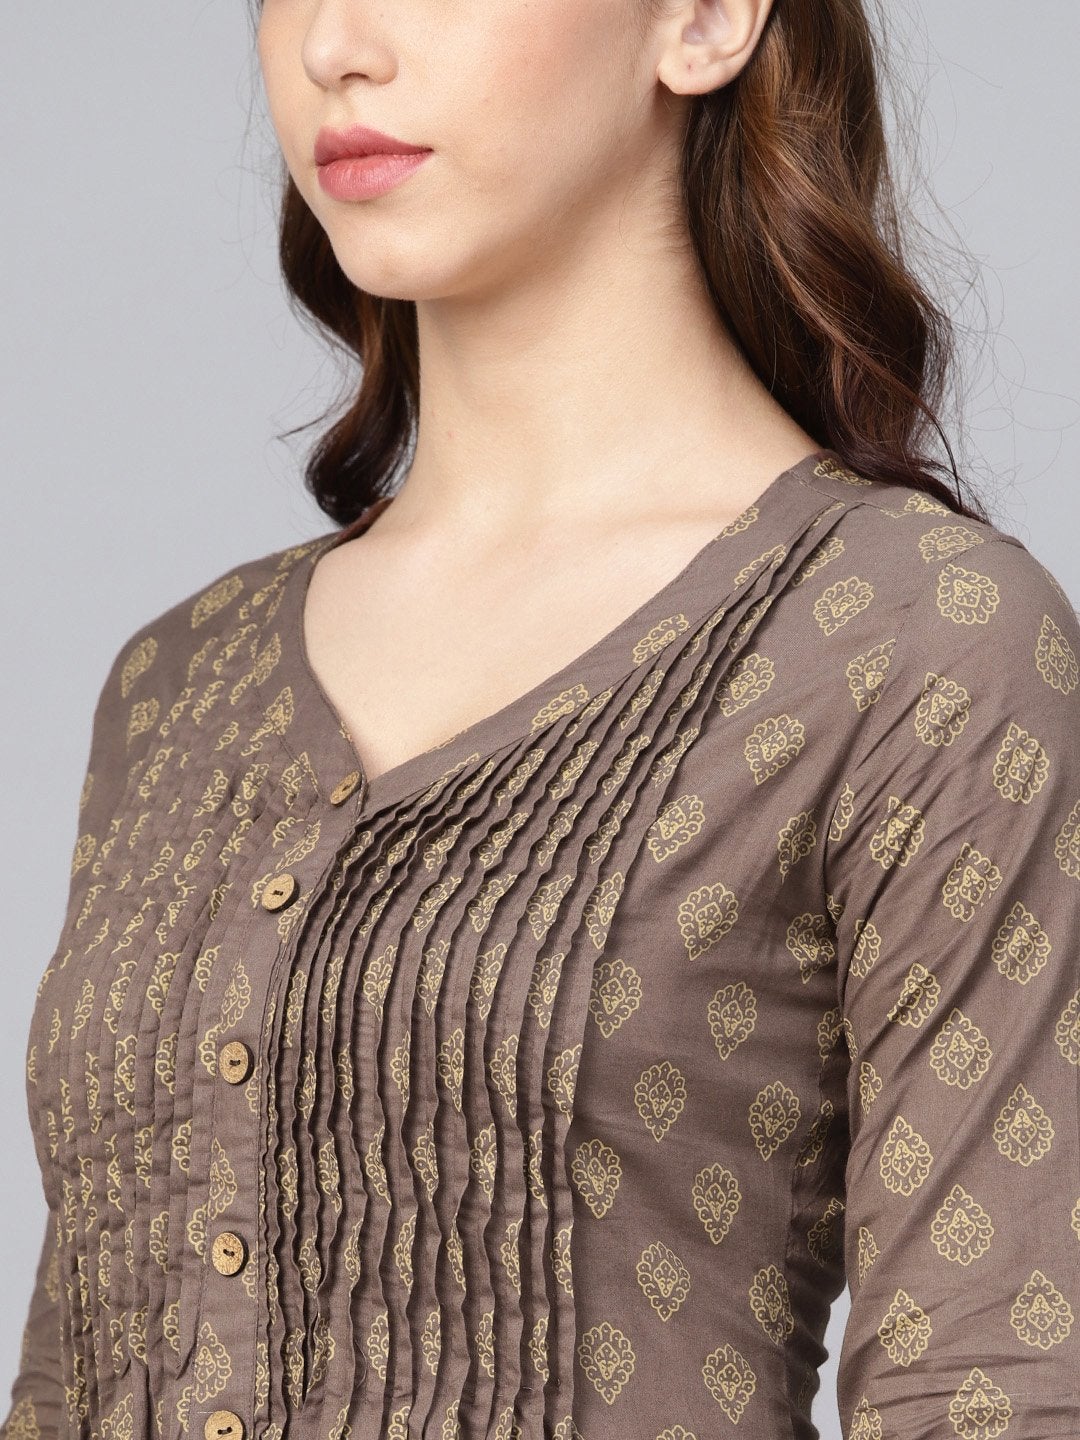 Women's Printed Brown & Beige A-Line Dress - Meeranshi